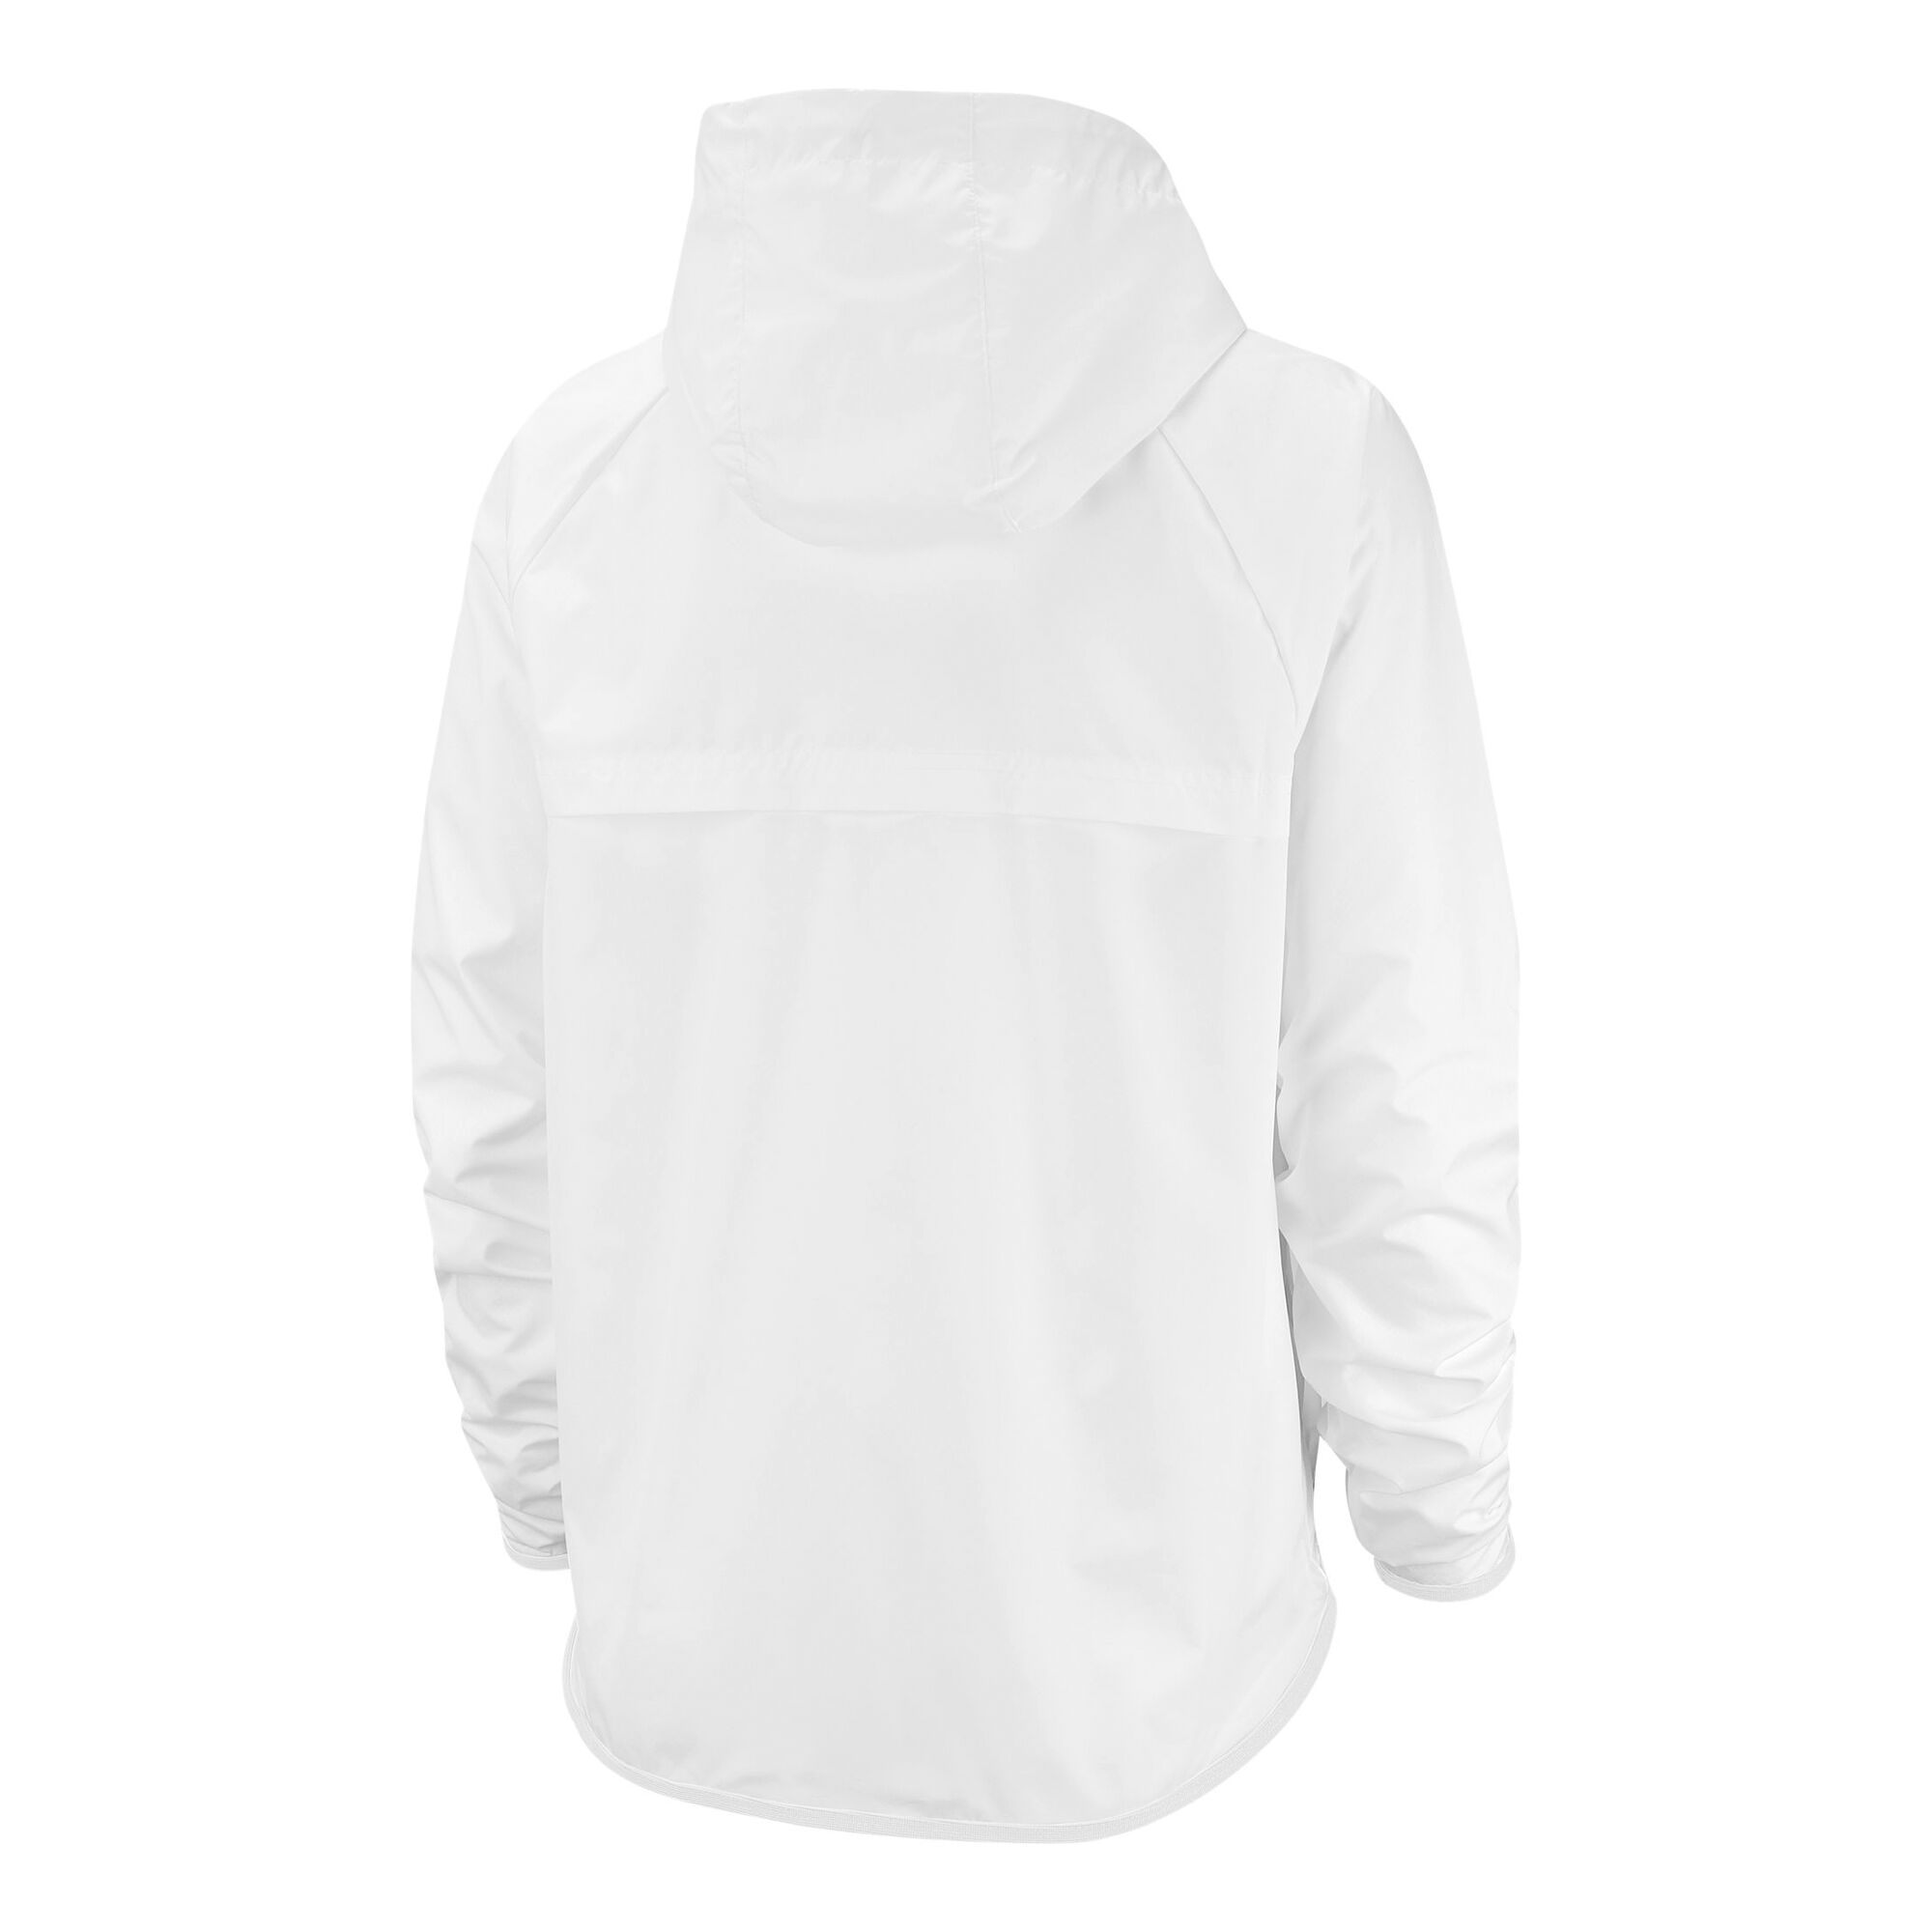 Buy Nike Sportswear Windrunner Training Jacket Women White, Black online